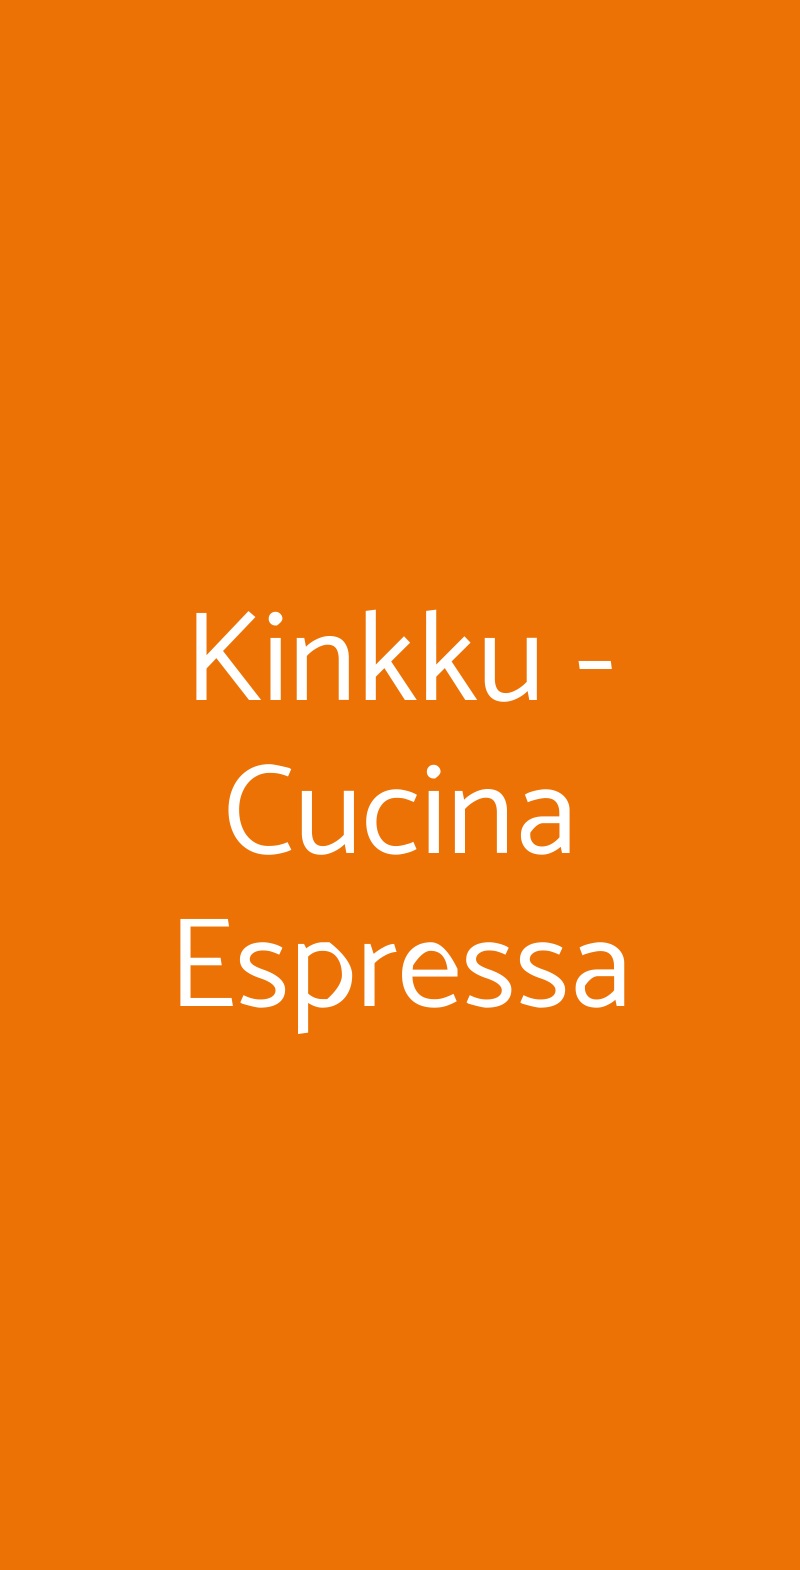 Kinkku - Cucina Espressa Roma menù 1 pagina